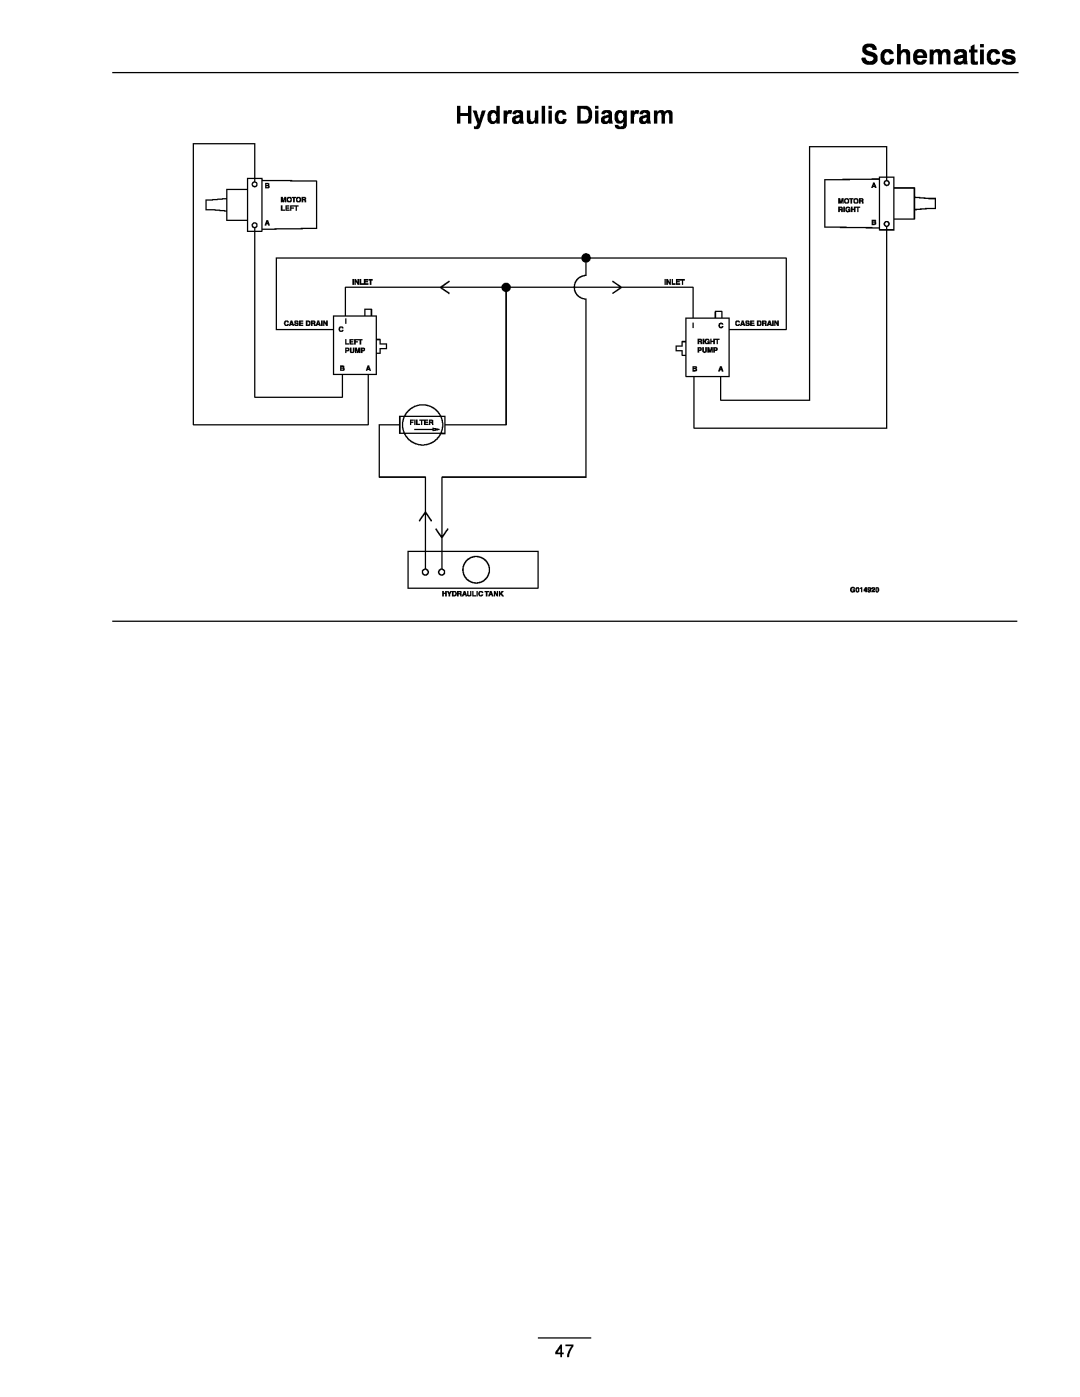 Exmark 920, 000 & higher manual Hydraulic Diagram, Schematics 